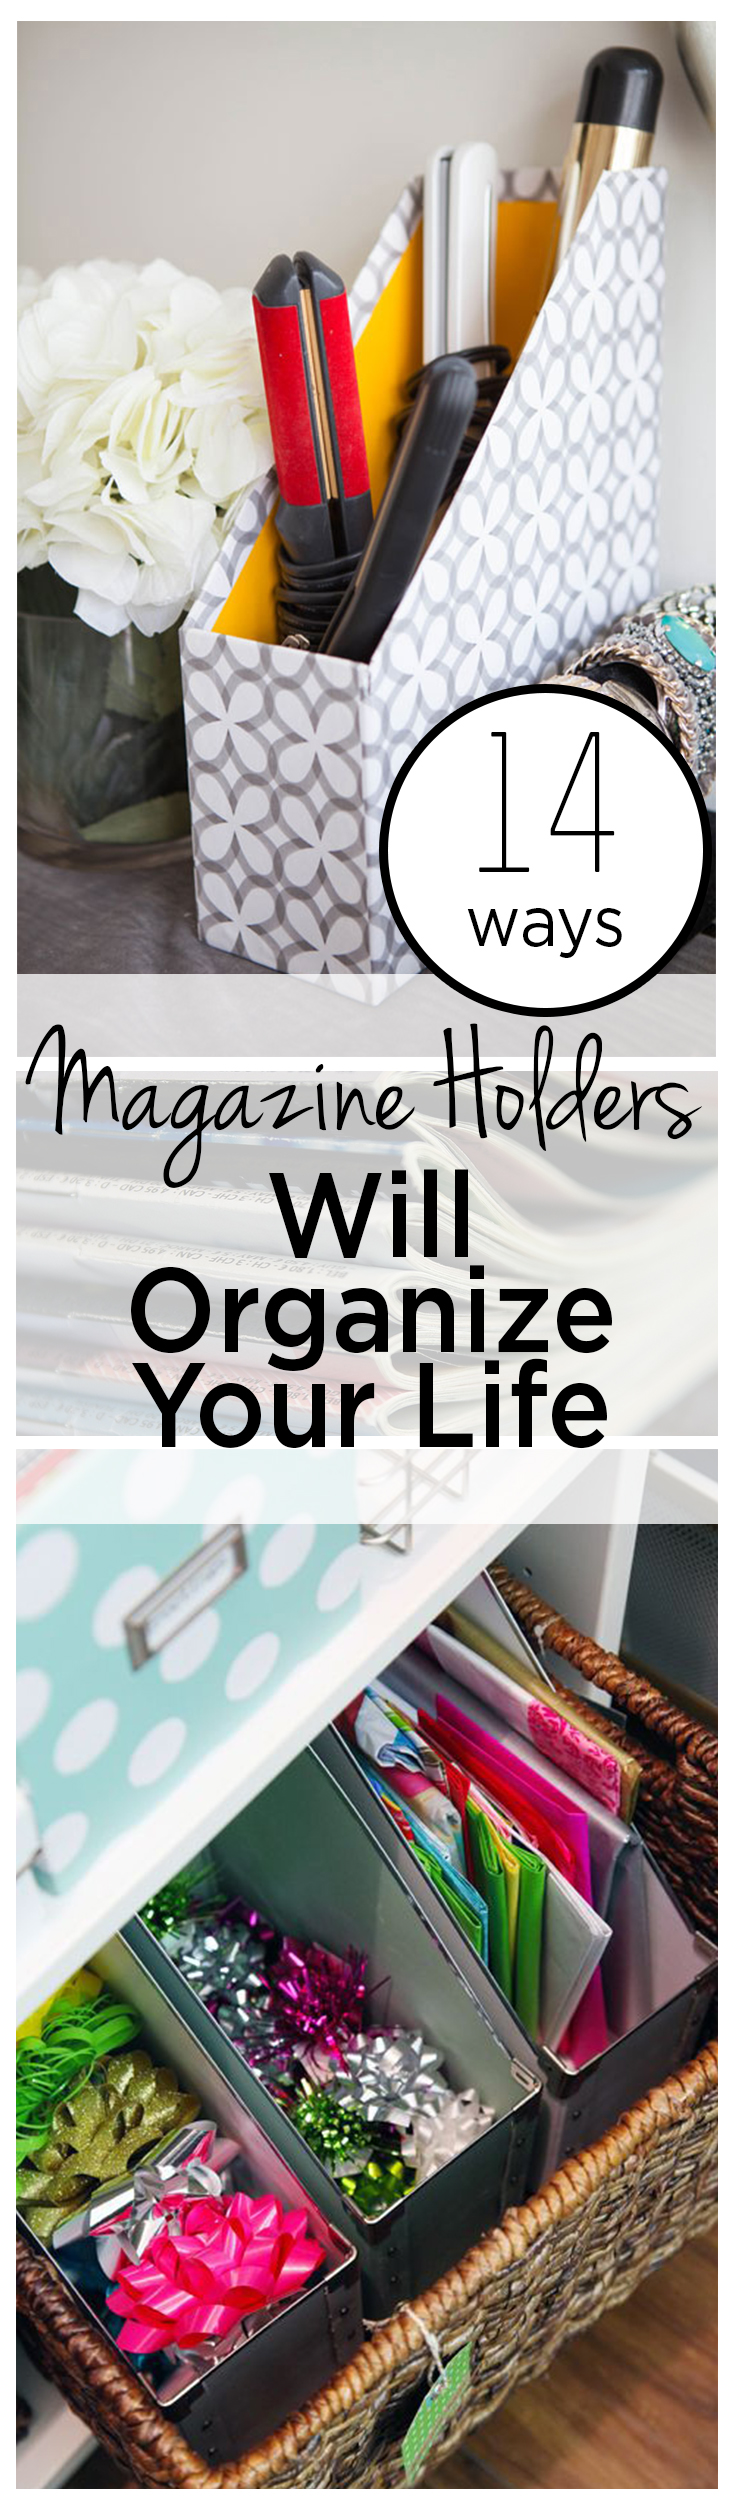 14-ways-magazine-holders-will-organize-your-life-1